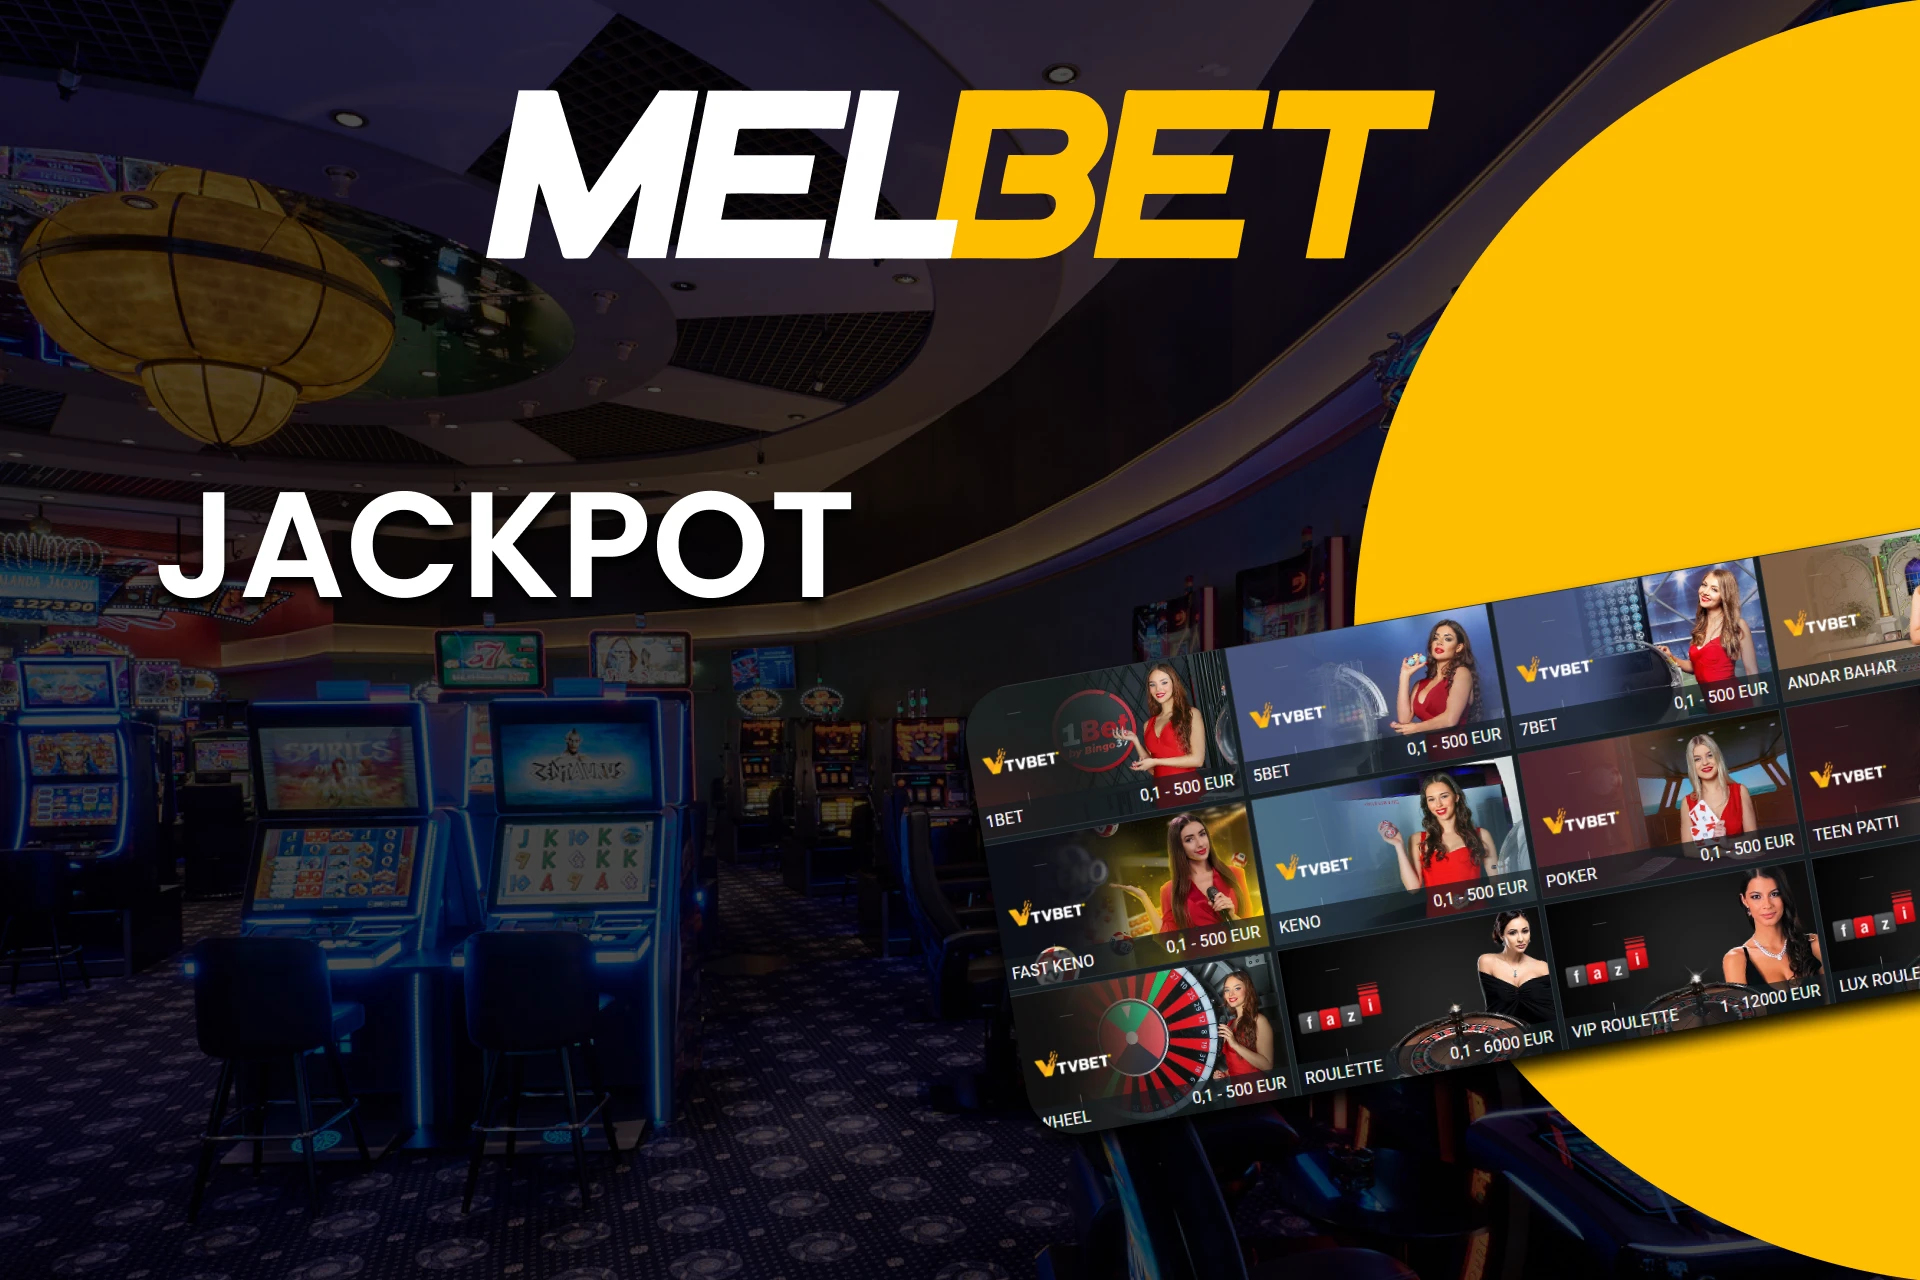 For Melbet Live Casino games, choose Jackpot.